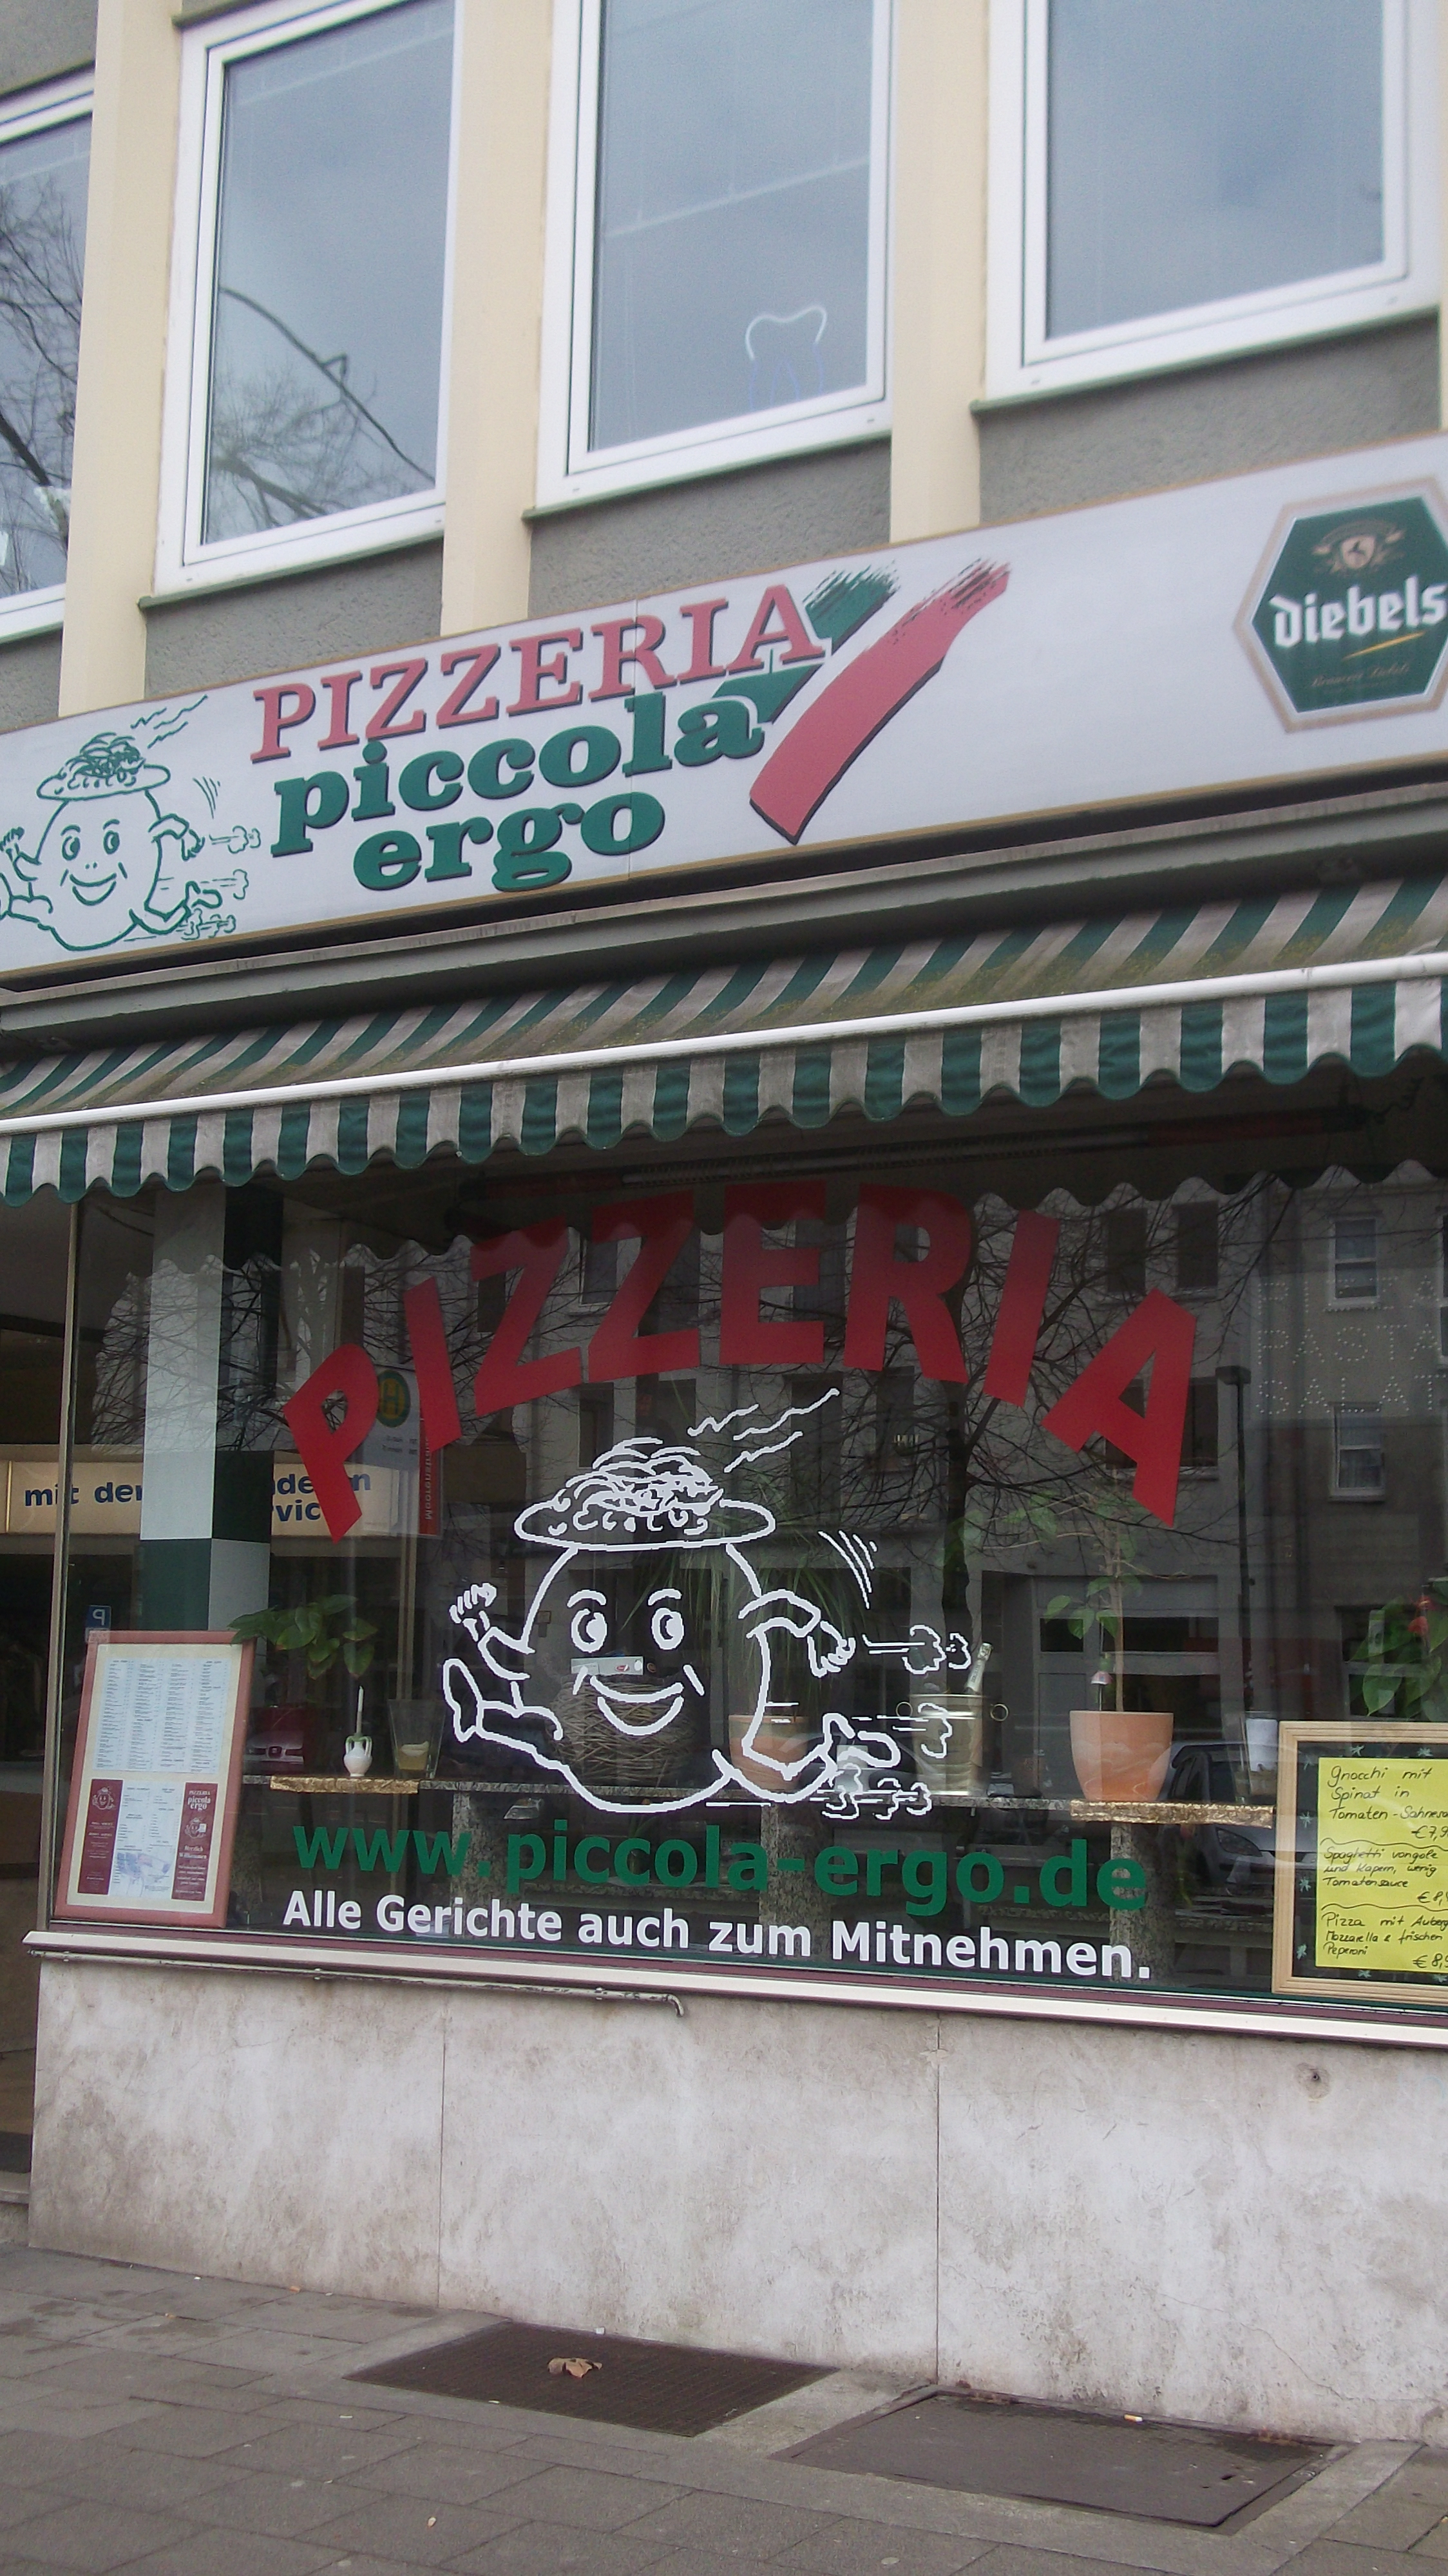 Bild 1 Pizzeria Piccola Ergo in Düsseldorf